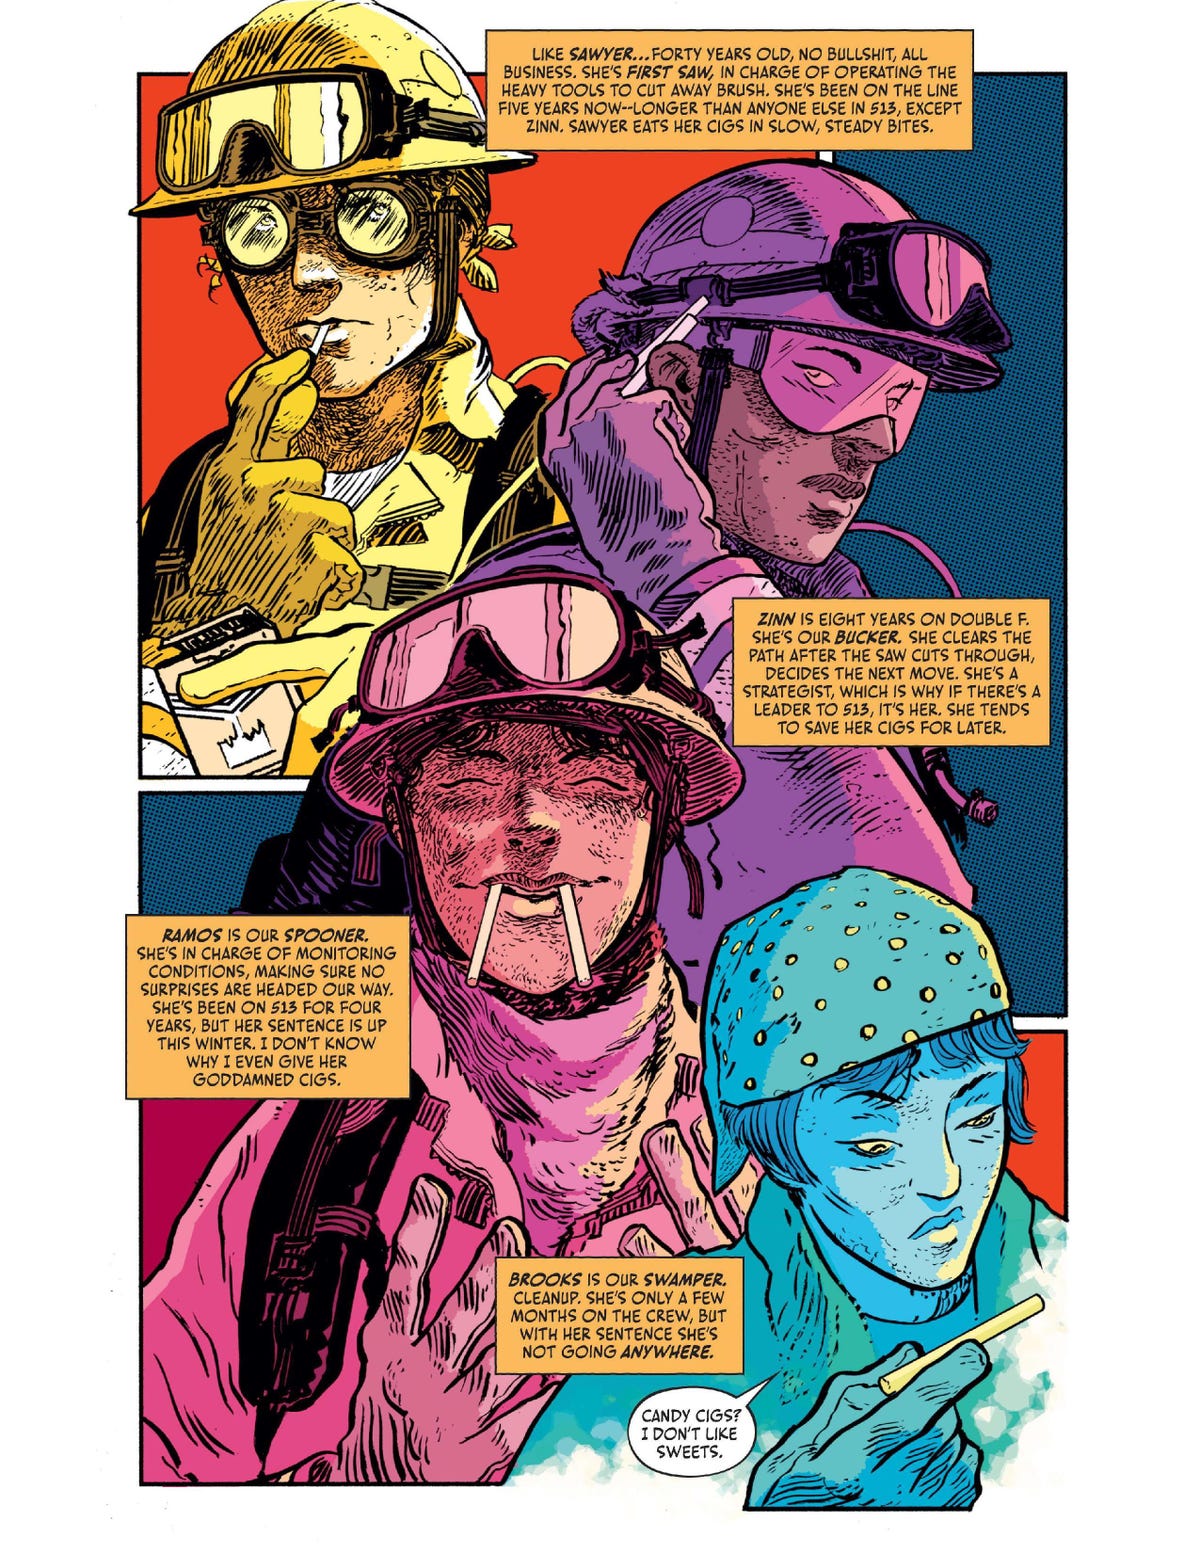 Comic page closeups of four women